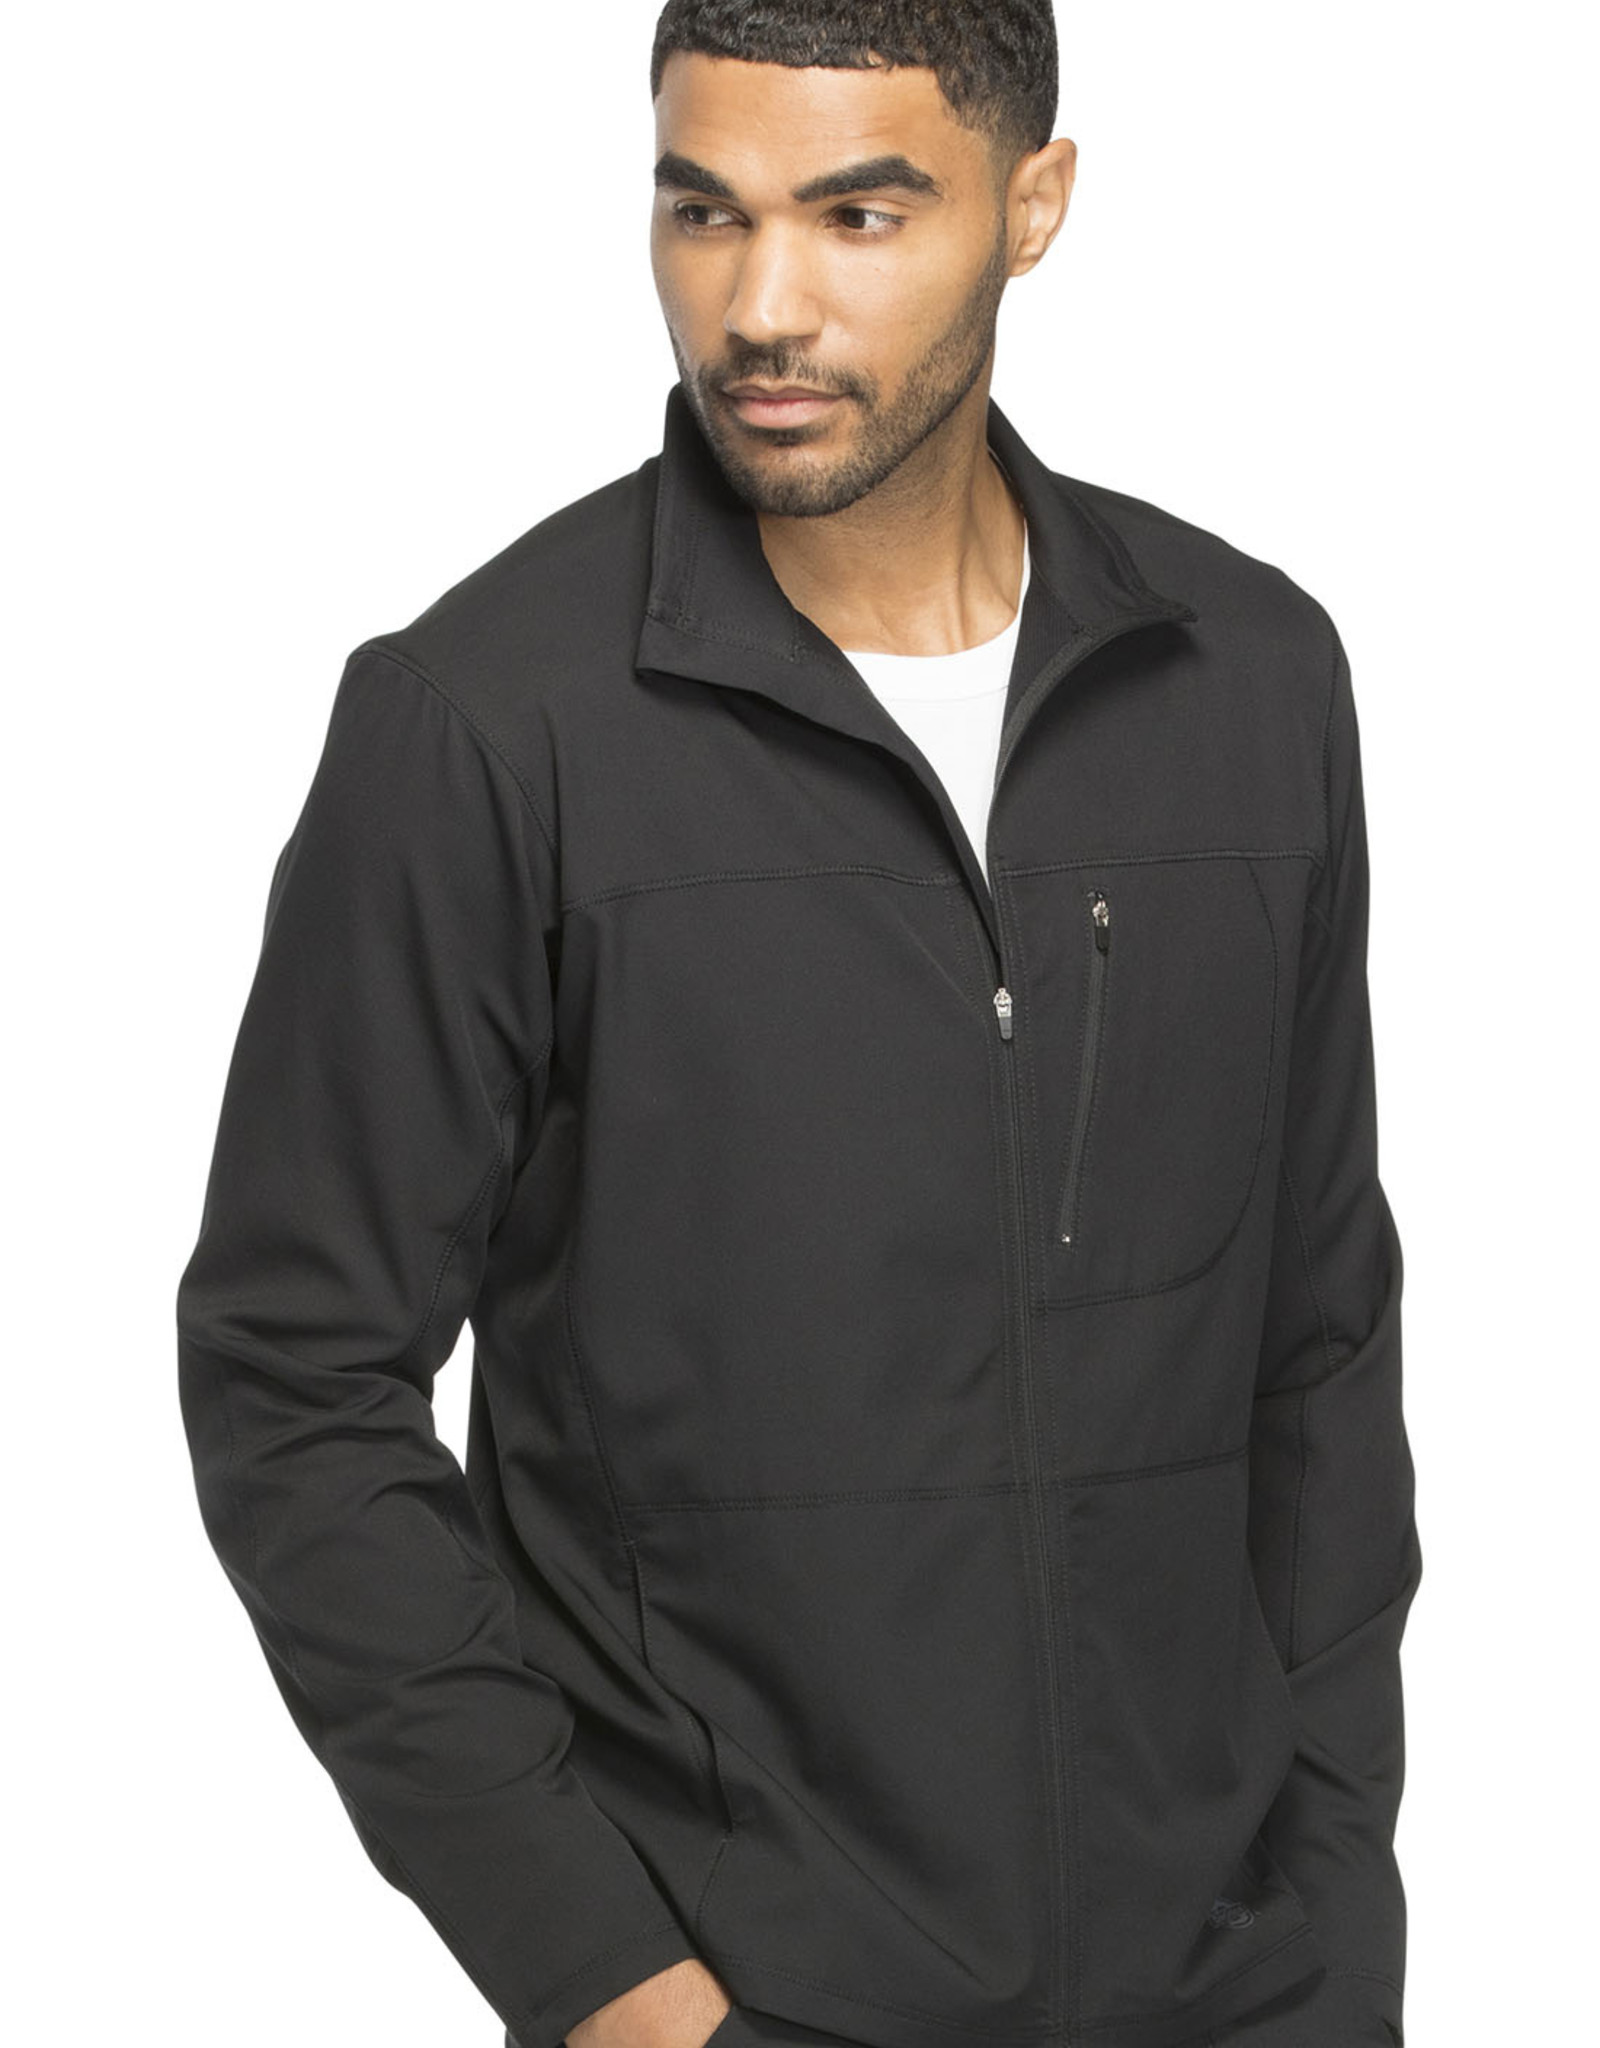 Dickies Dynamix Men's Zip Front Warm-Up Jacket (Regular and Plus Size)